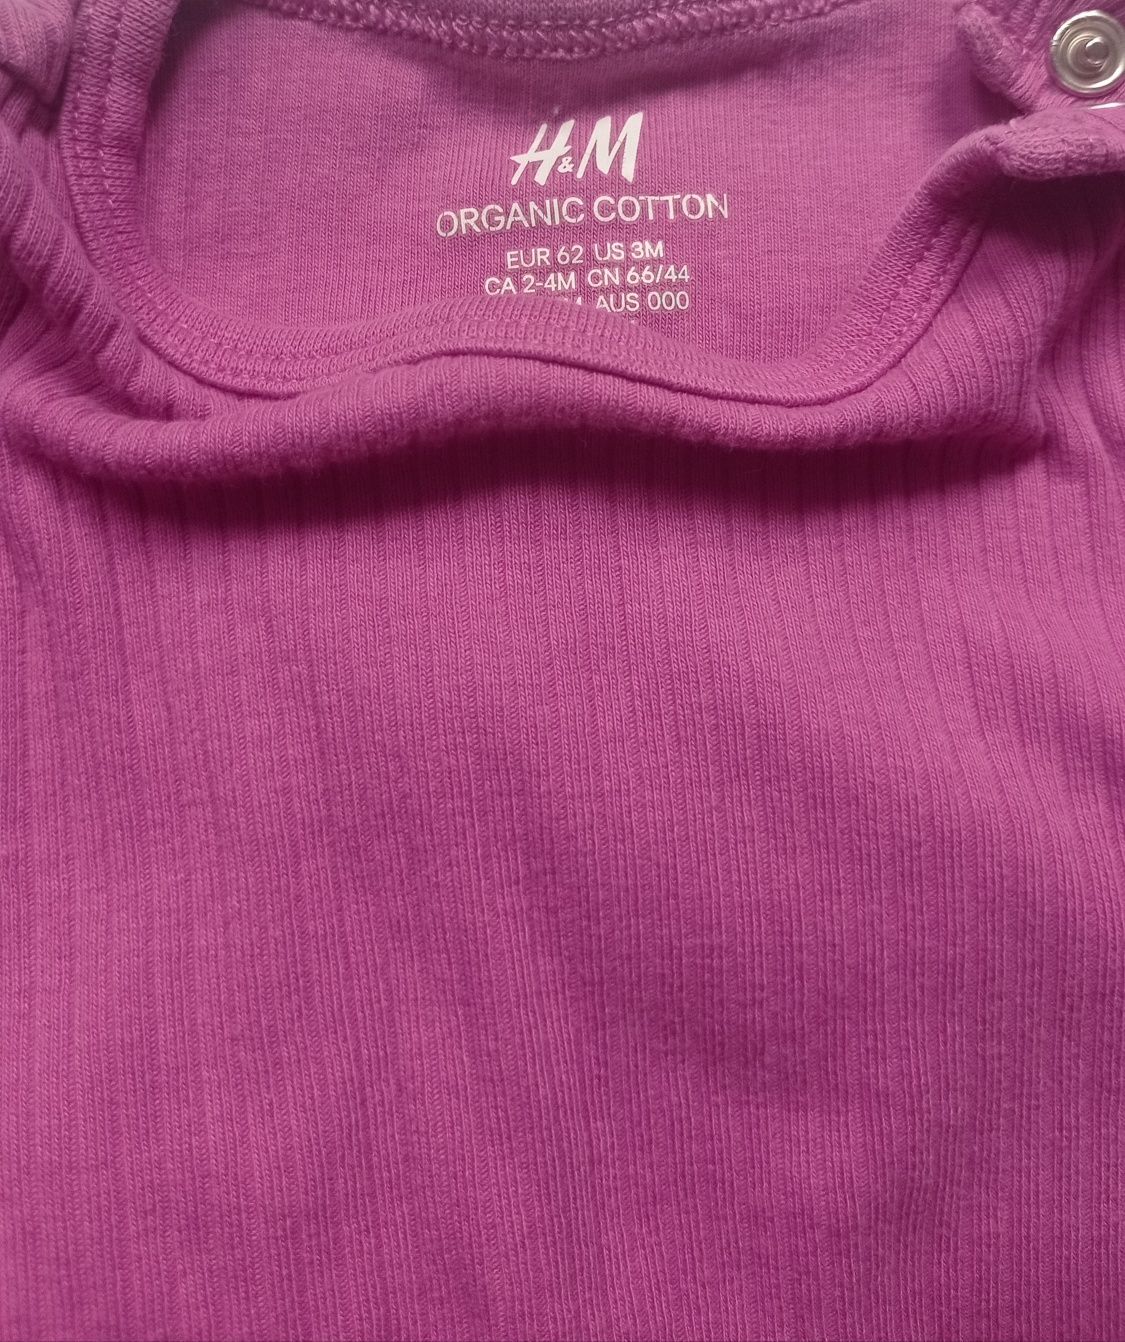 Komplet / zestaw niemowlęcy H&M 62